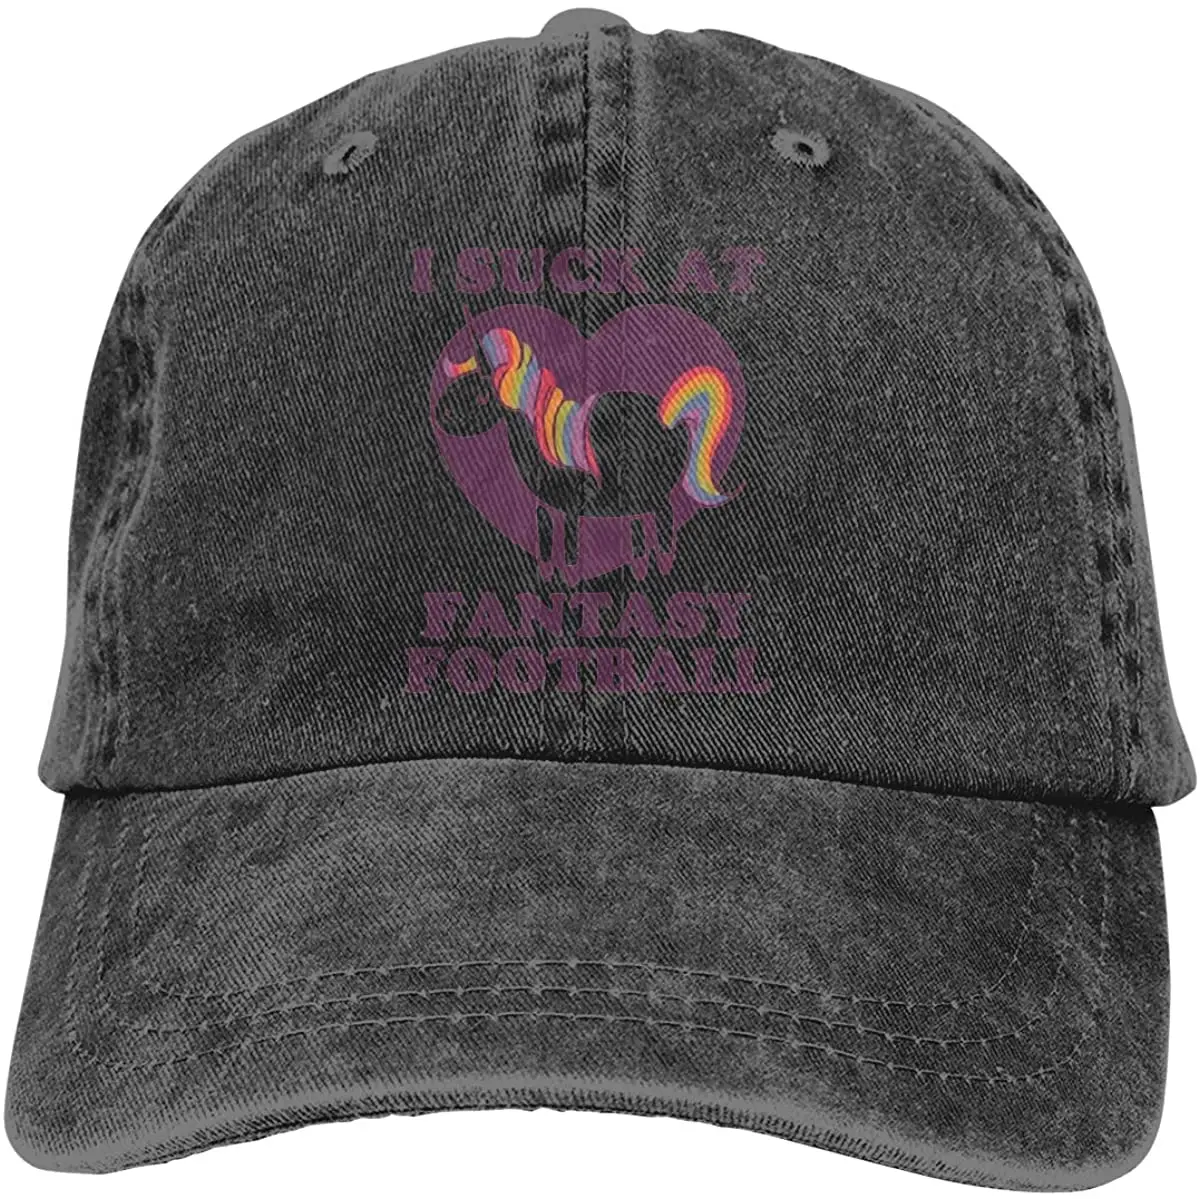 I Suck at Fantasy Football Loser Unisex Cowboy Hats Sport Denim Hat Fashion Baseball Cap Black